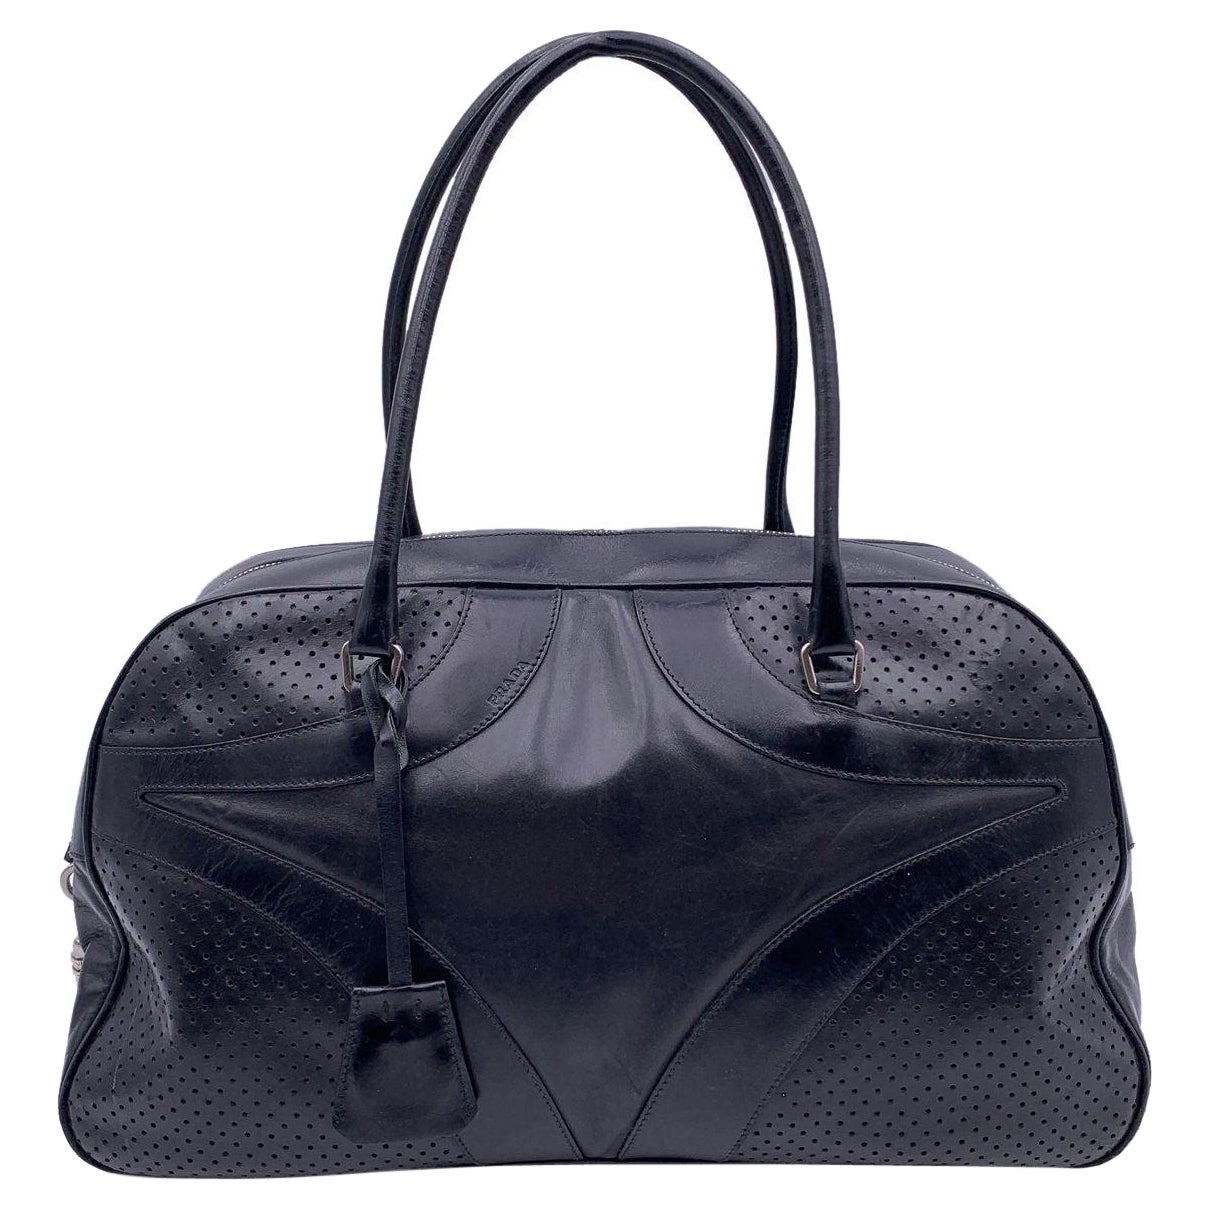 Prada Black Leather Bowling Bag Satchel Bowler Handbag